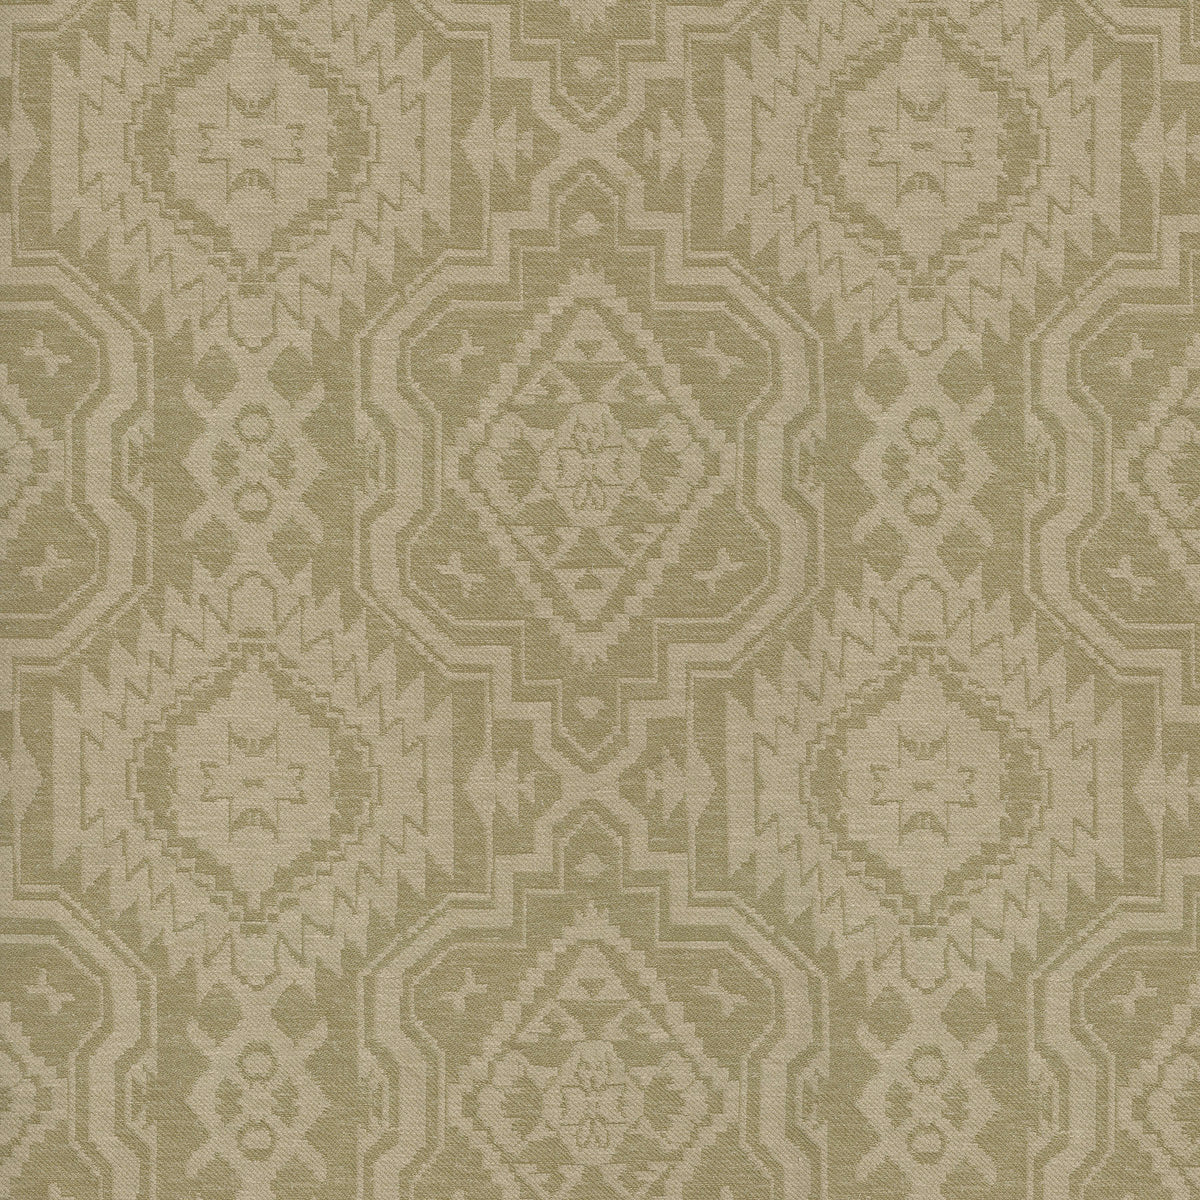 P/K Lifestyles Taos Blanket - Tumbleweed 411654 Upholstery Fabric